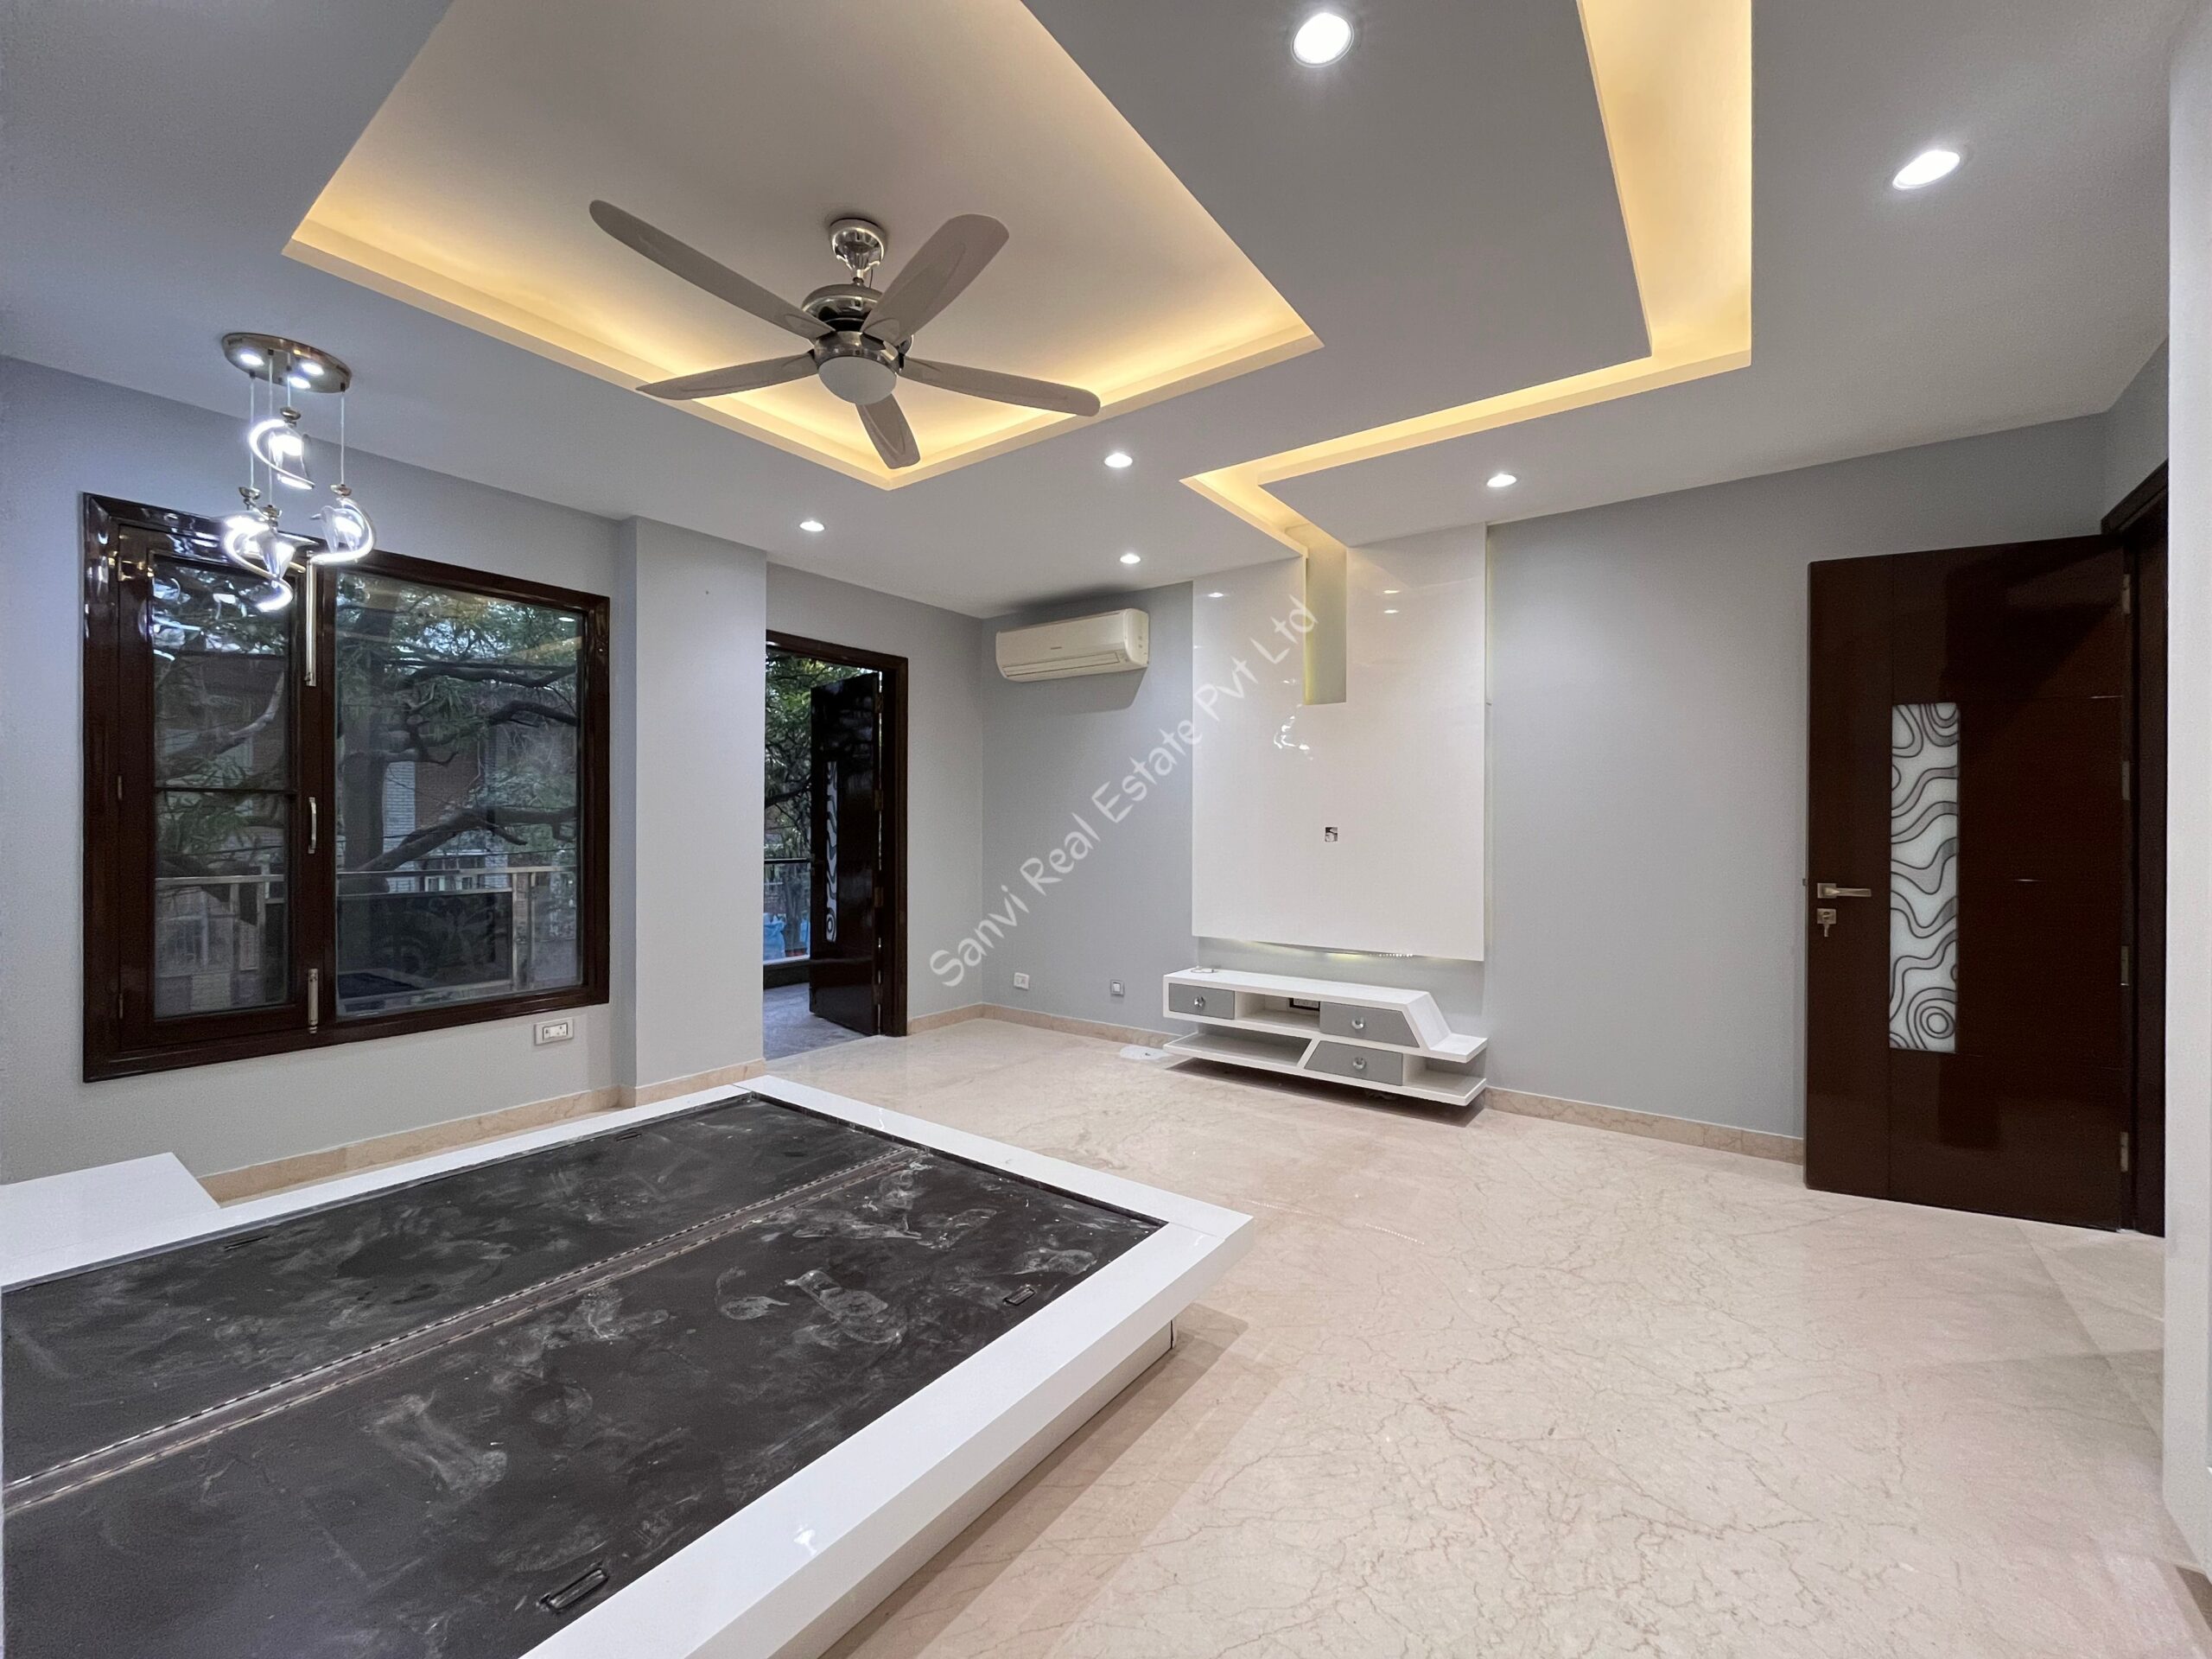 4 BHK Ultra Premium Property in Paschim Vihar, Delhi | M-Sanvi Real Estate |Flats in Delhi